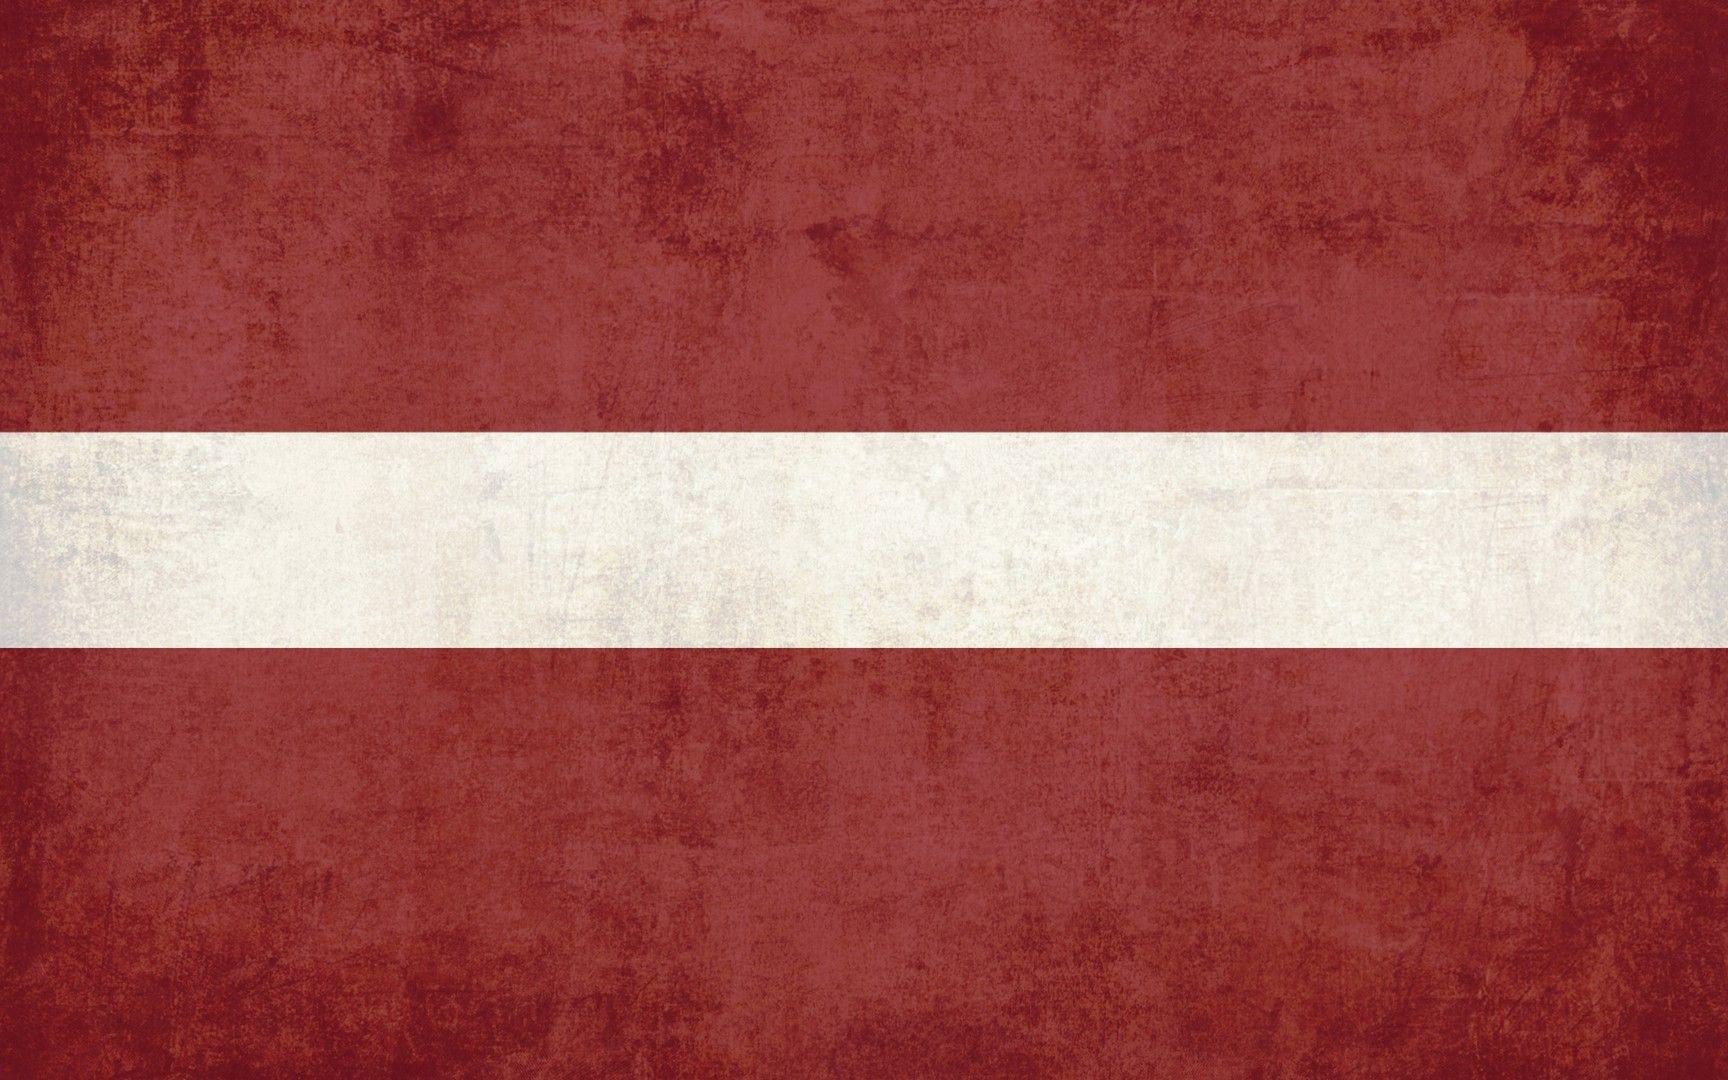 Latvia Flag Wallpaper